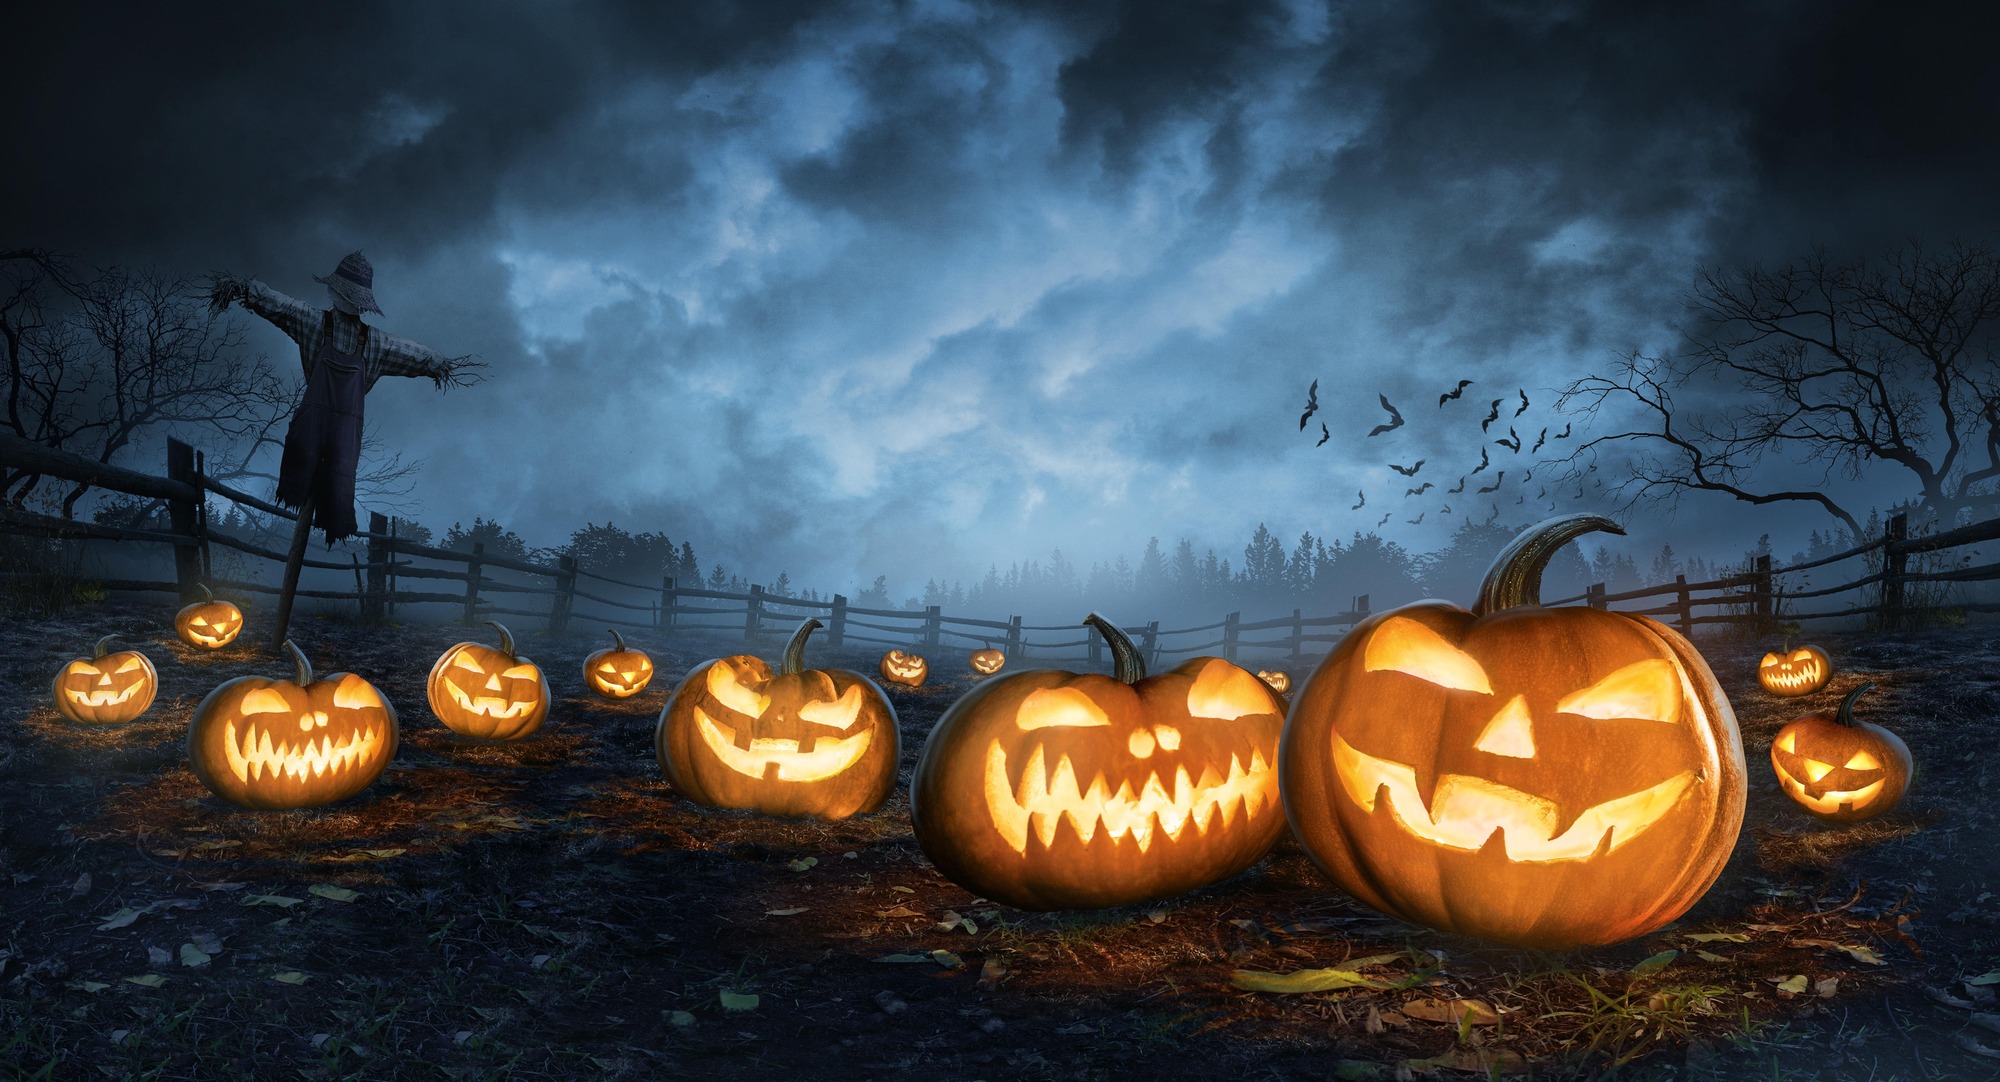 16 juegos de Android para pasarlo de miedo este Halloween